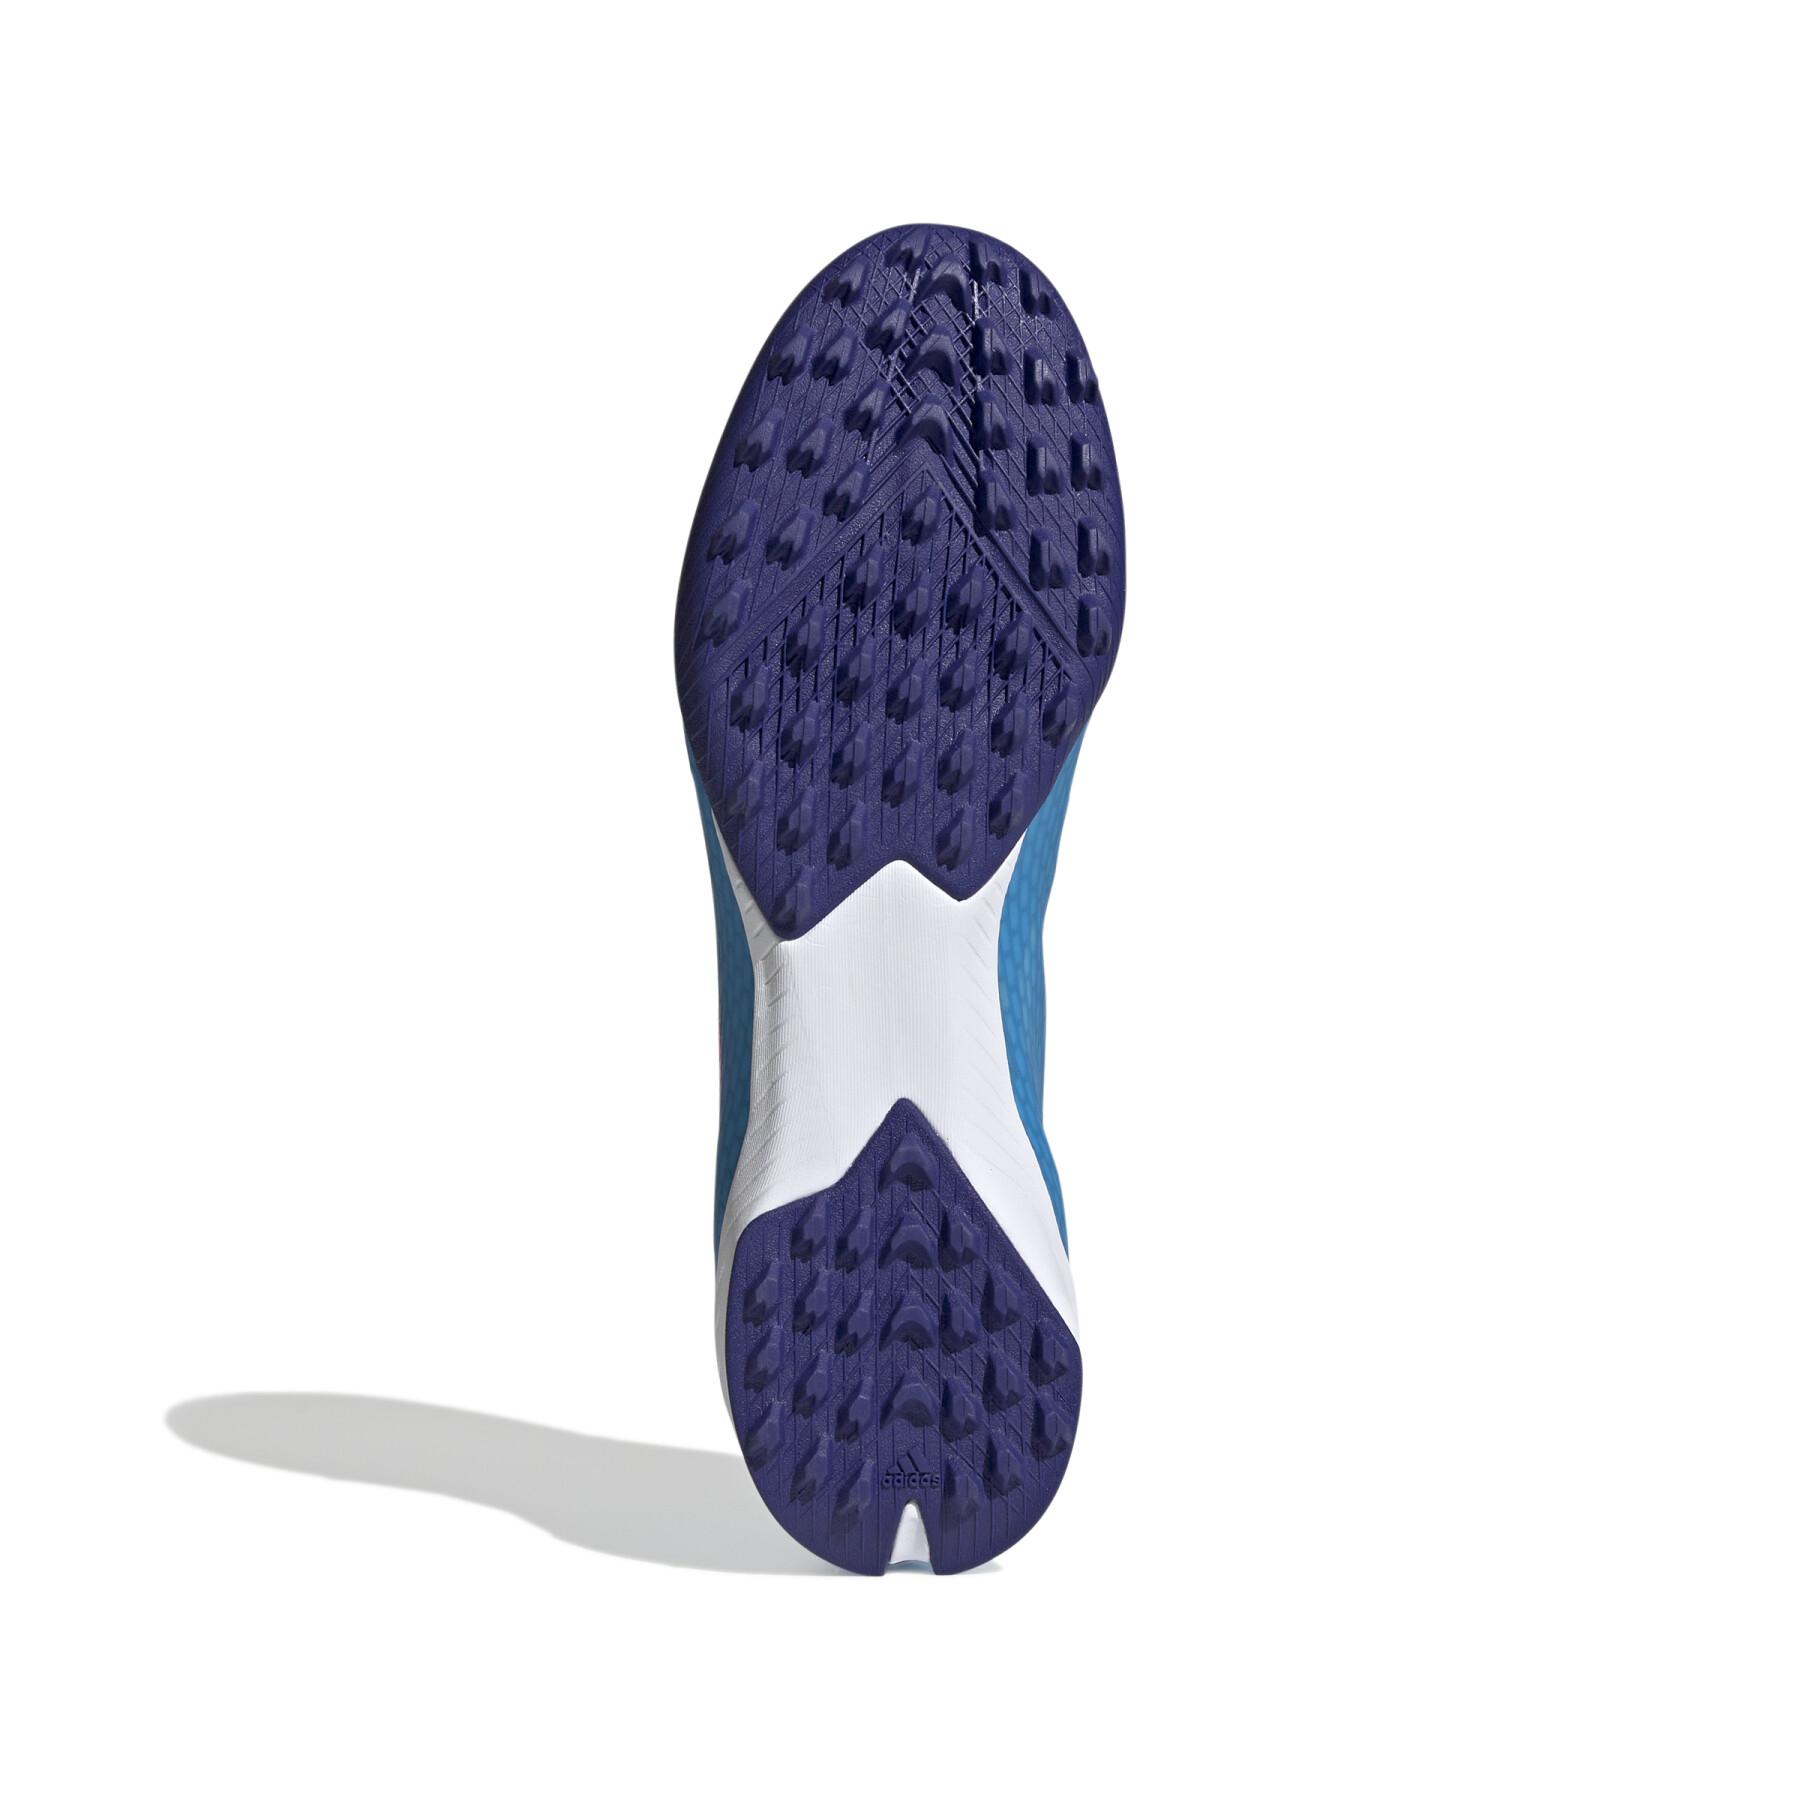 Soccer shoes adidas X Speedflow.3 TF